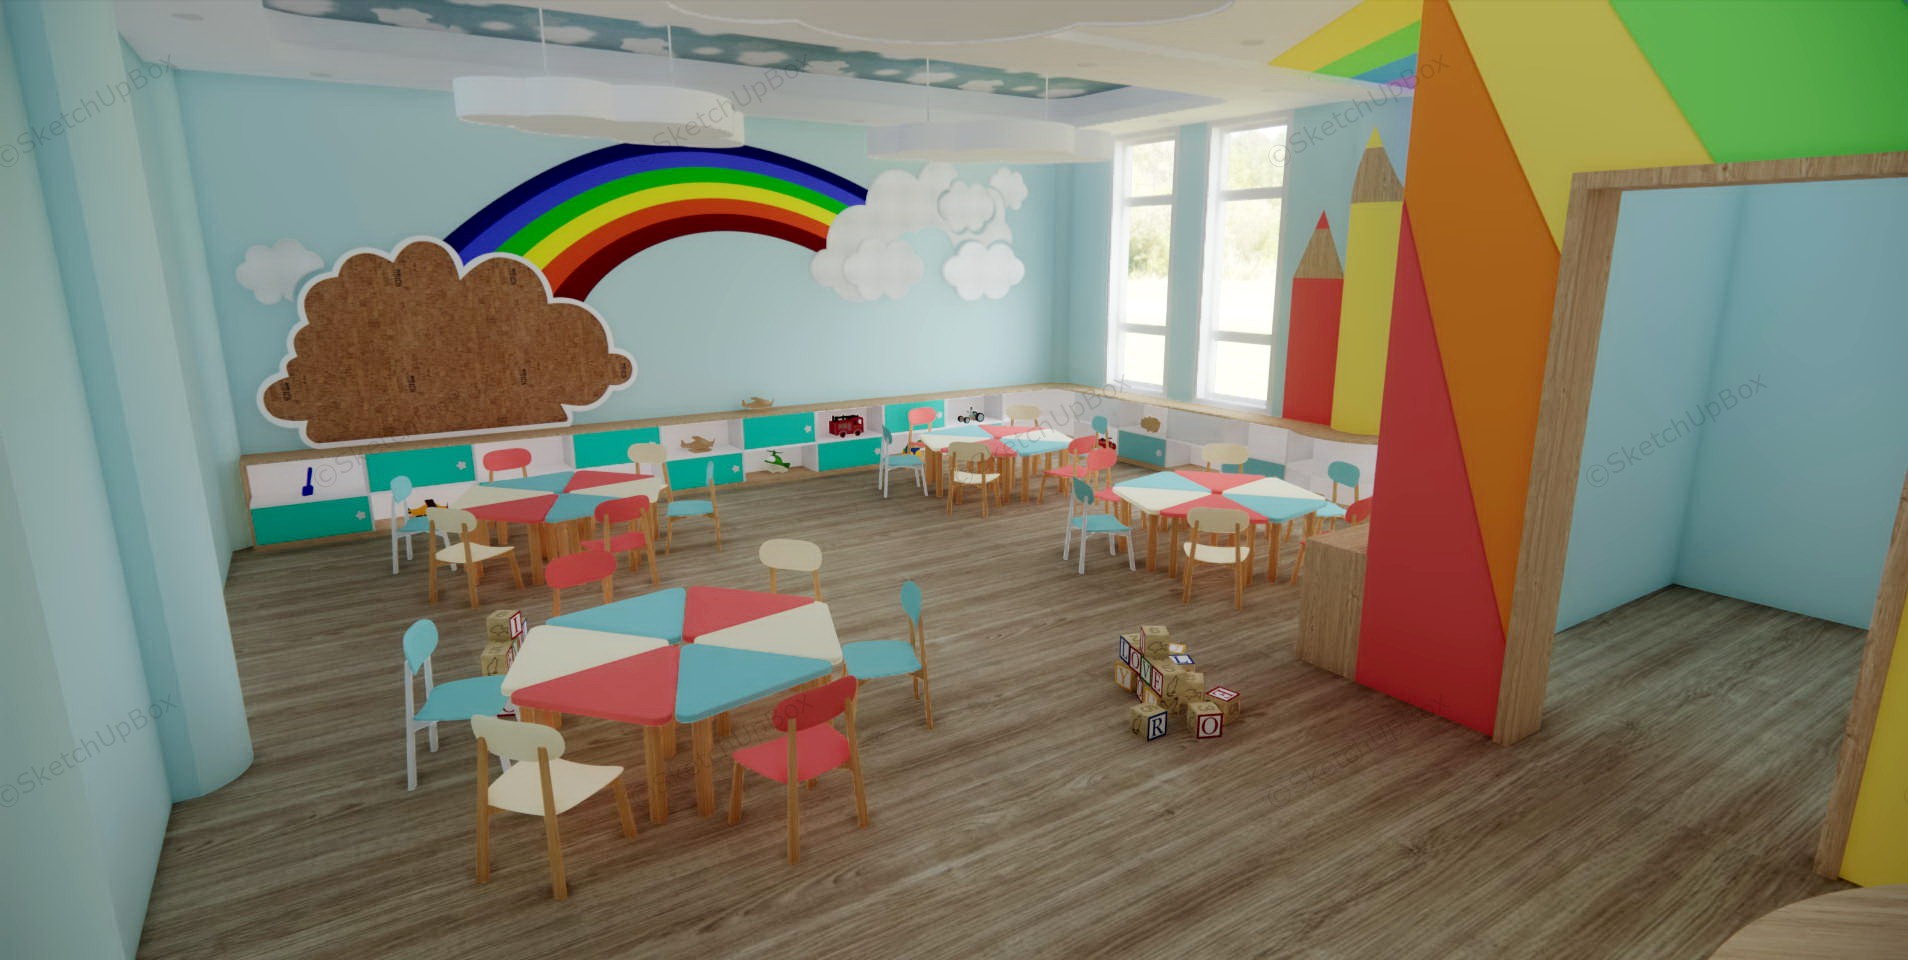 Preschool Playroom Idea sketchup model preview - SketchupBox